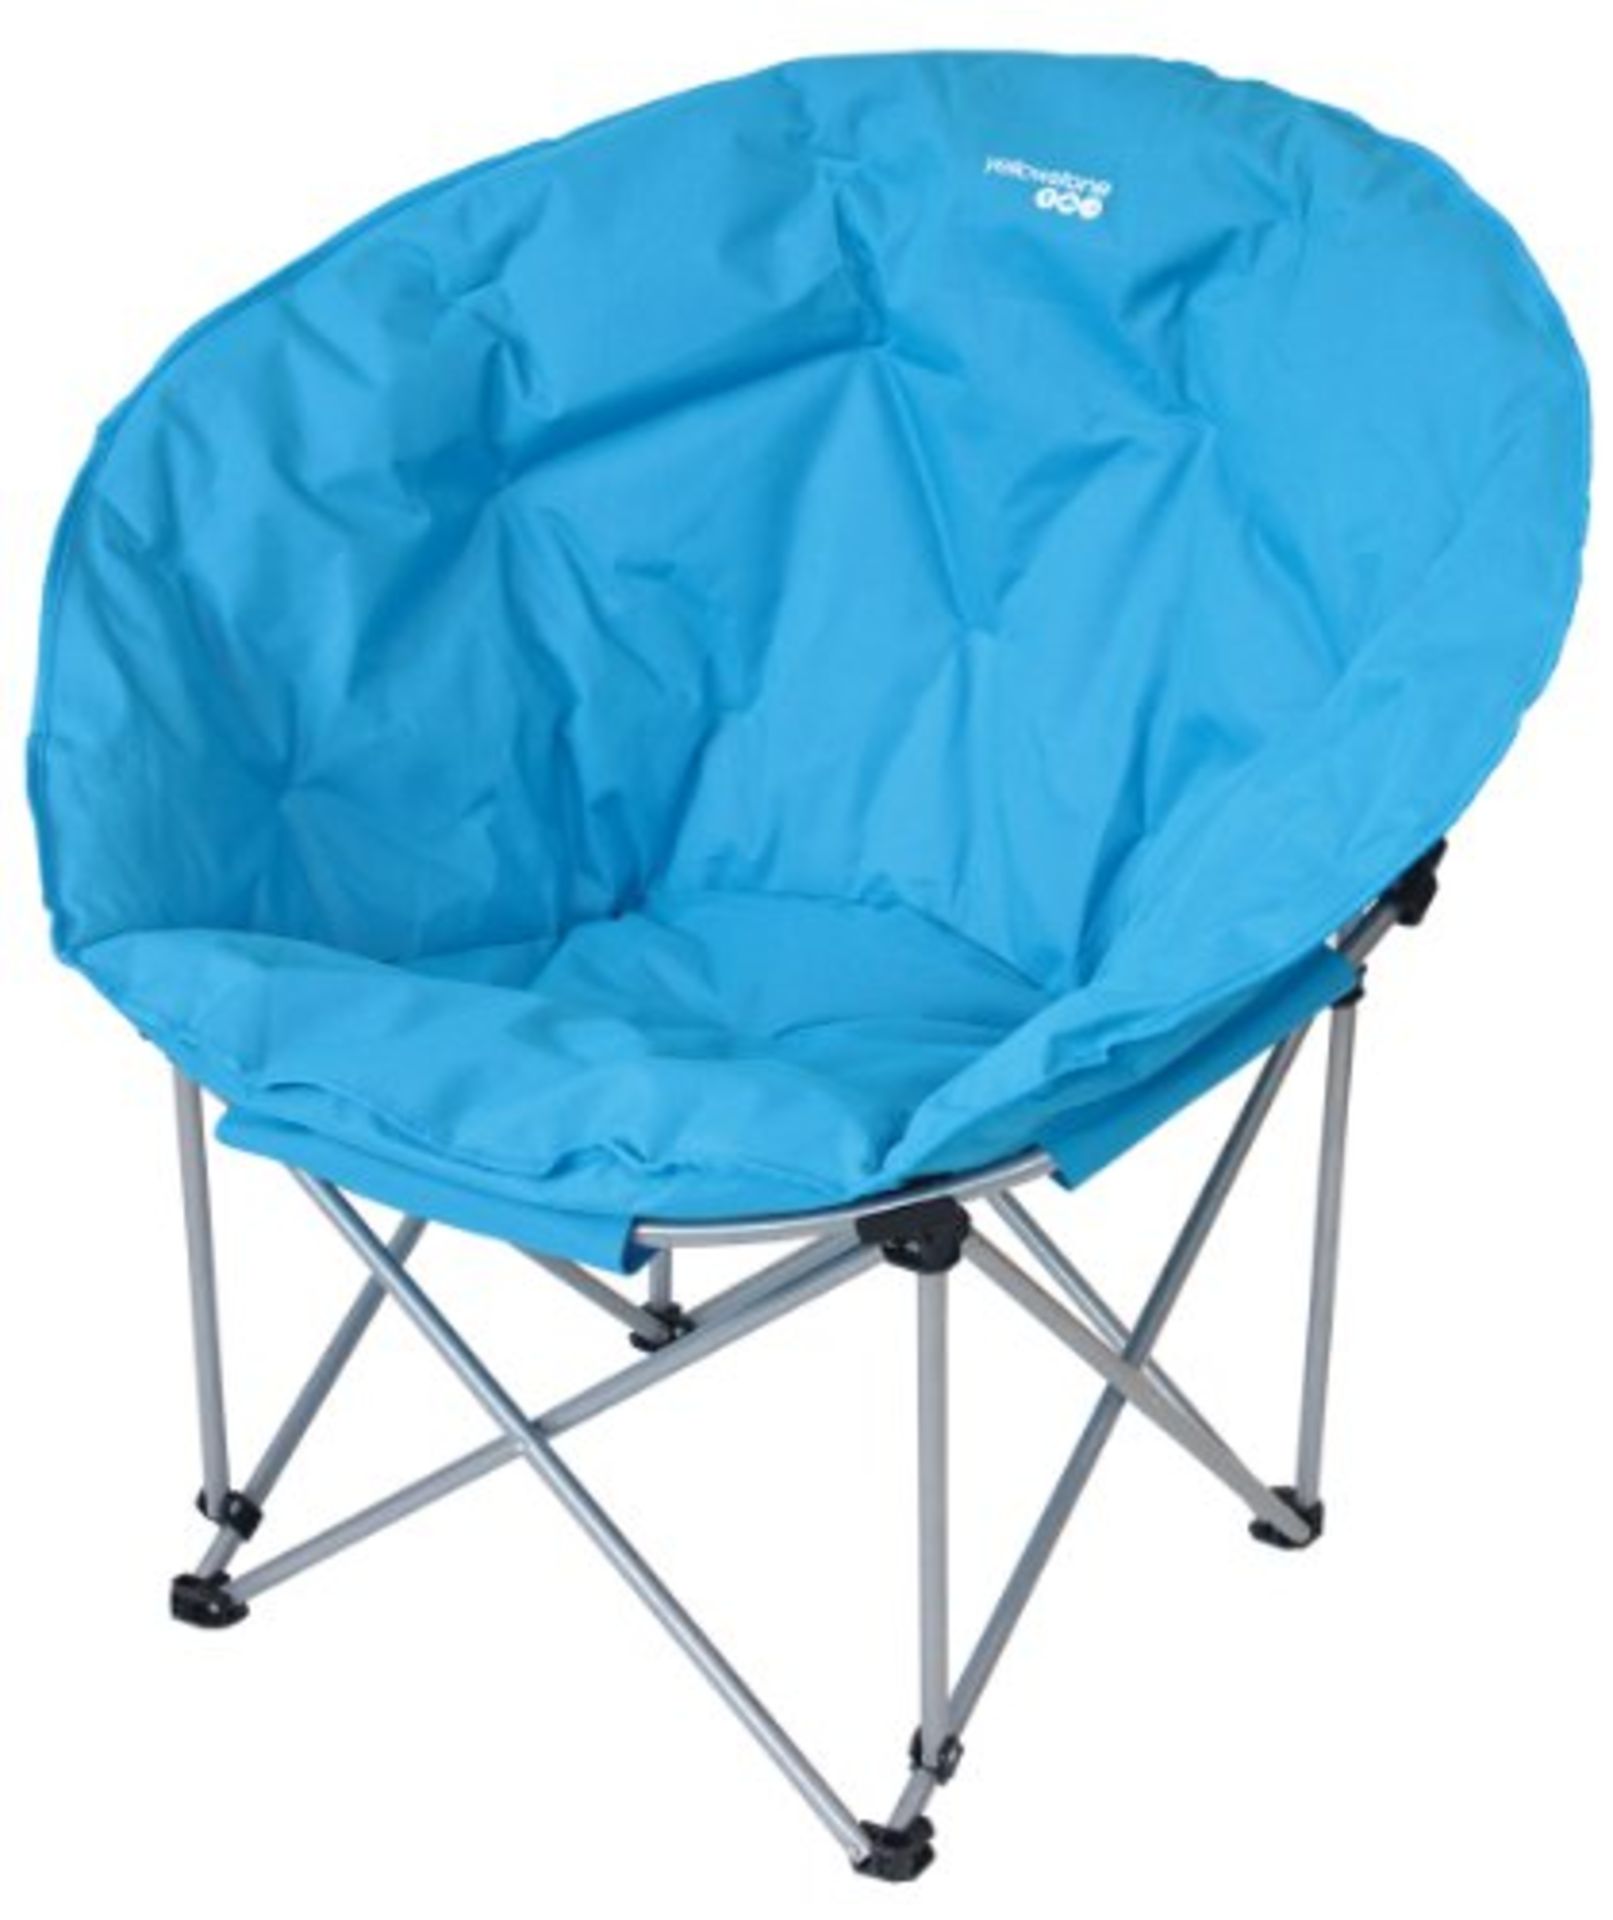 V Grade A Orbit Outdoor Blue Leisure Chair RRP £34.99